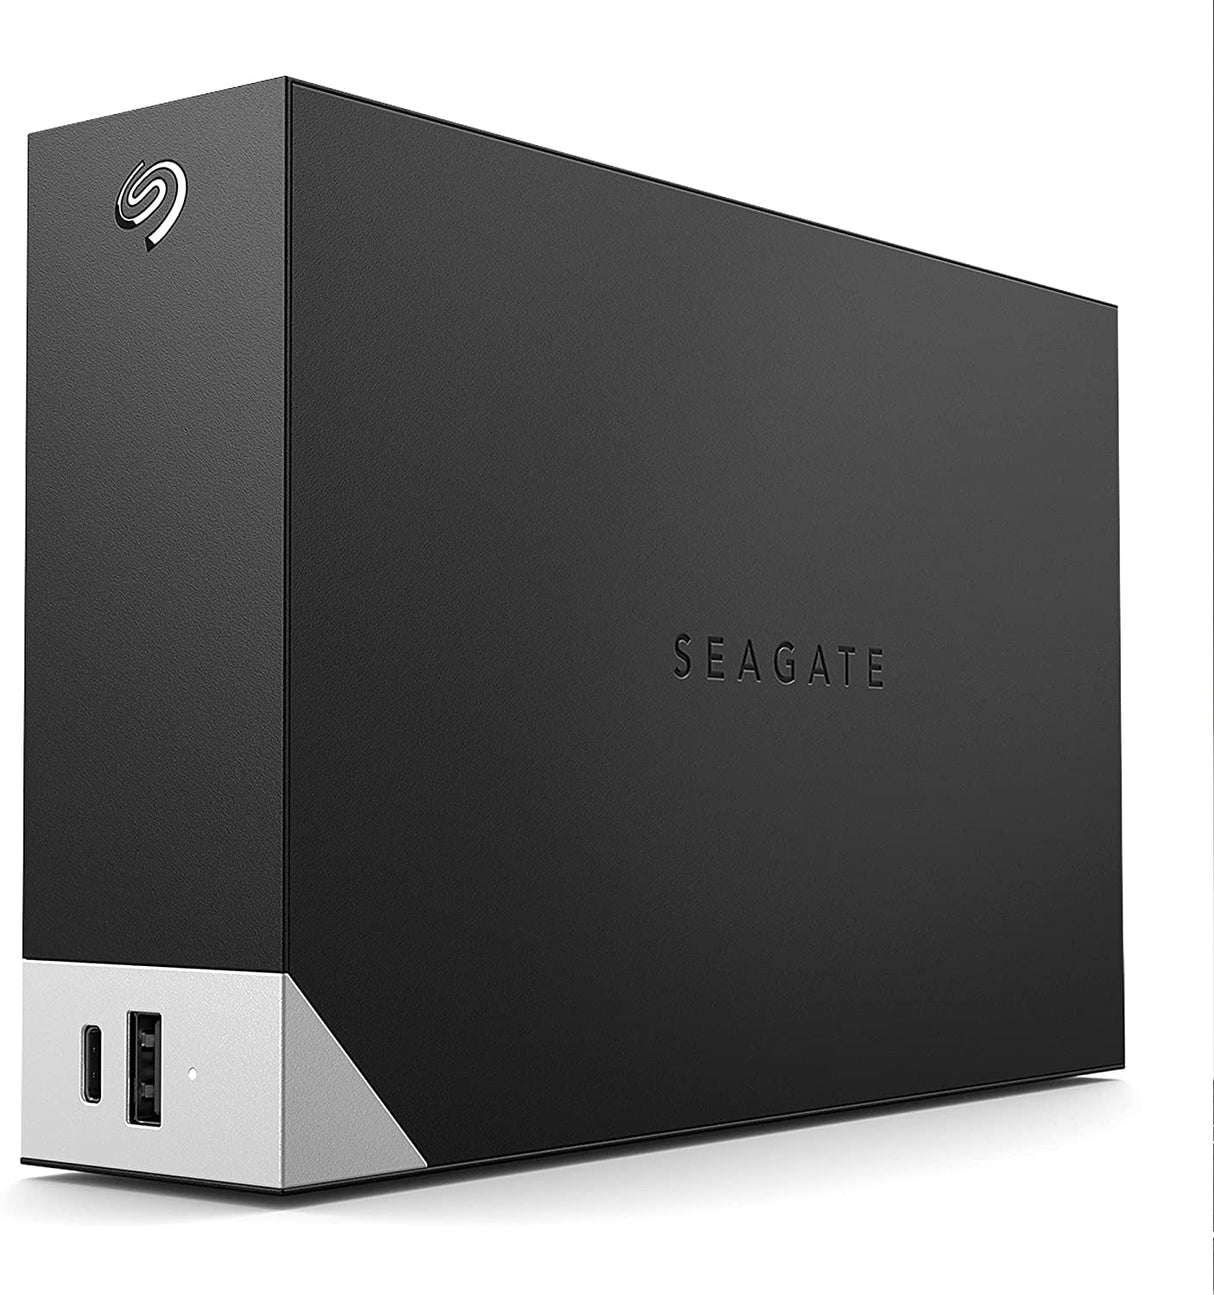 Seagate One Touch Hub 12TB External Hard Drive Desktop HDD – USB-C and USB 3.0 Port, for Computer Desktop Workstation PC Laptop Mac, 4 Months Adobe Creative Cloud Photography Plan (STLC12000400)